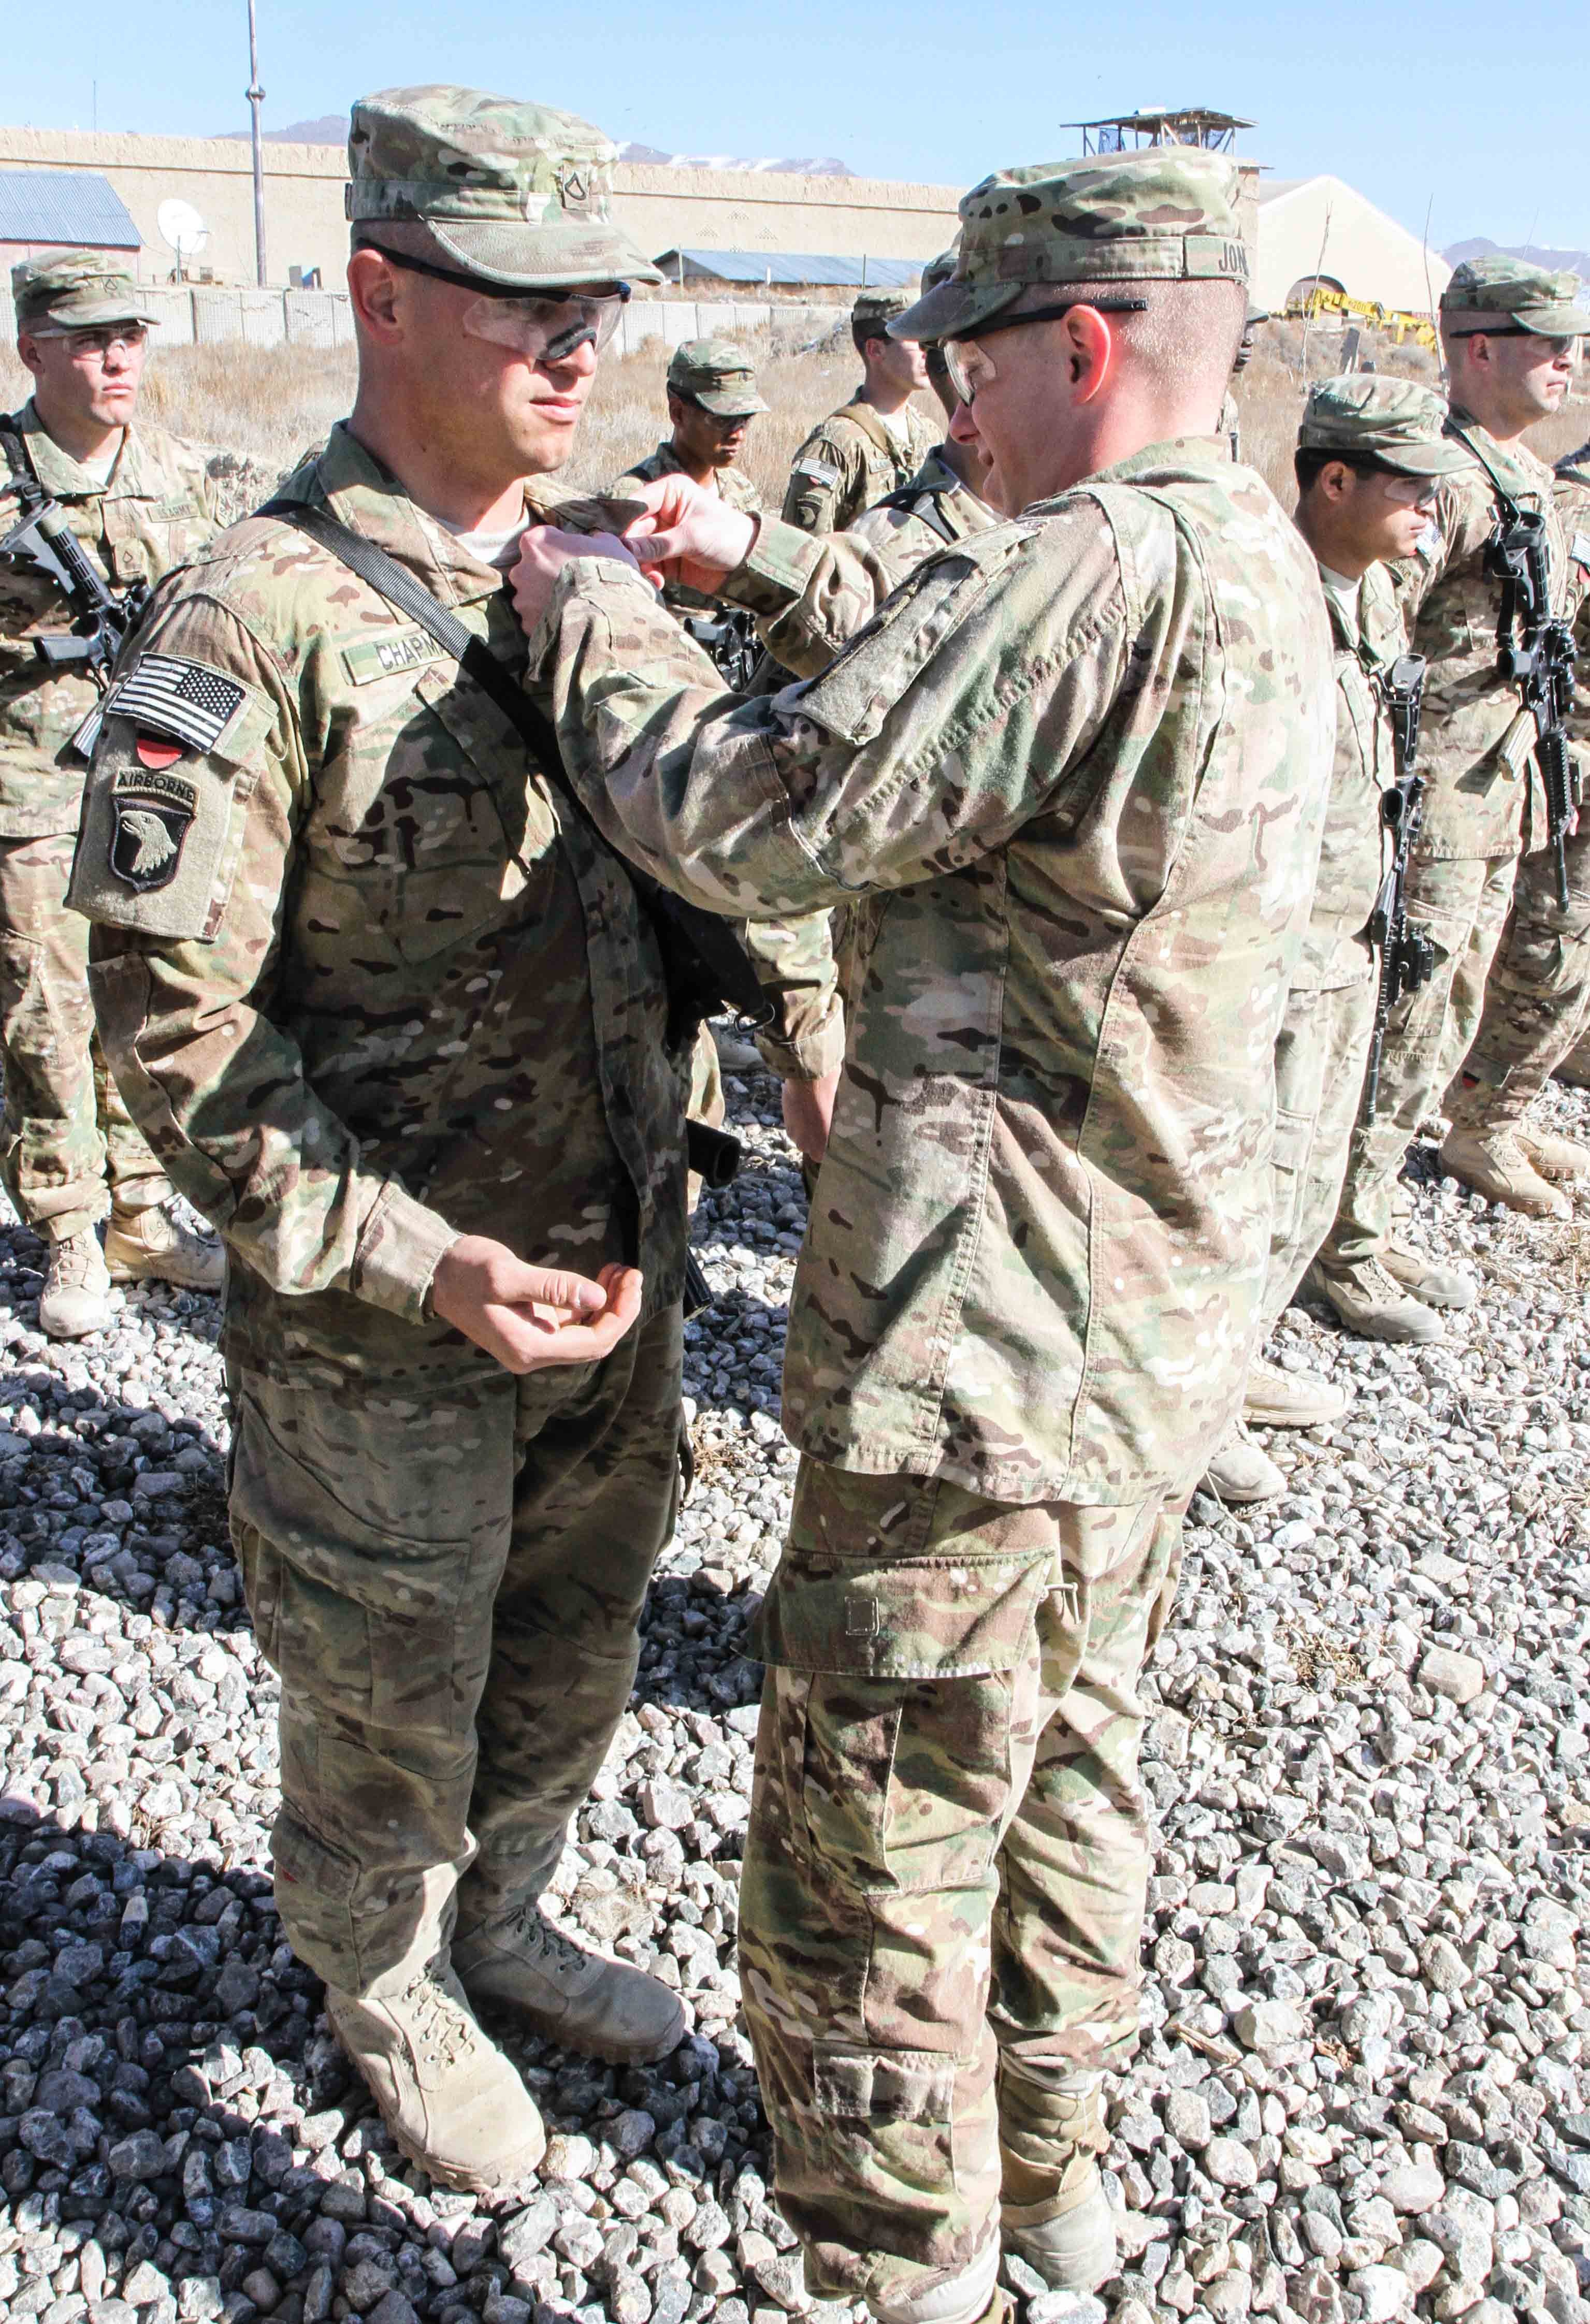 Rakkasans receive combat badges | Article | The United States Army